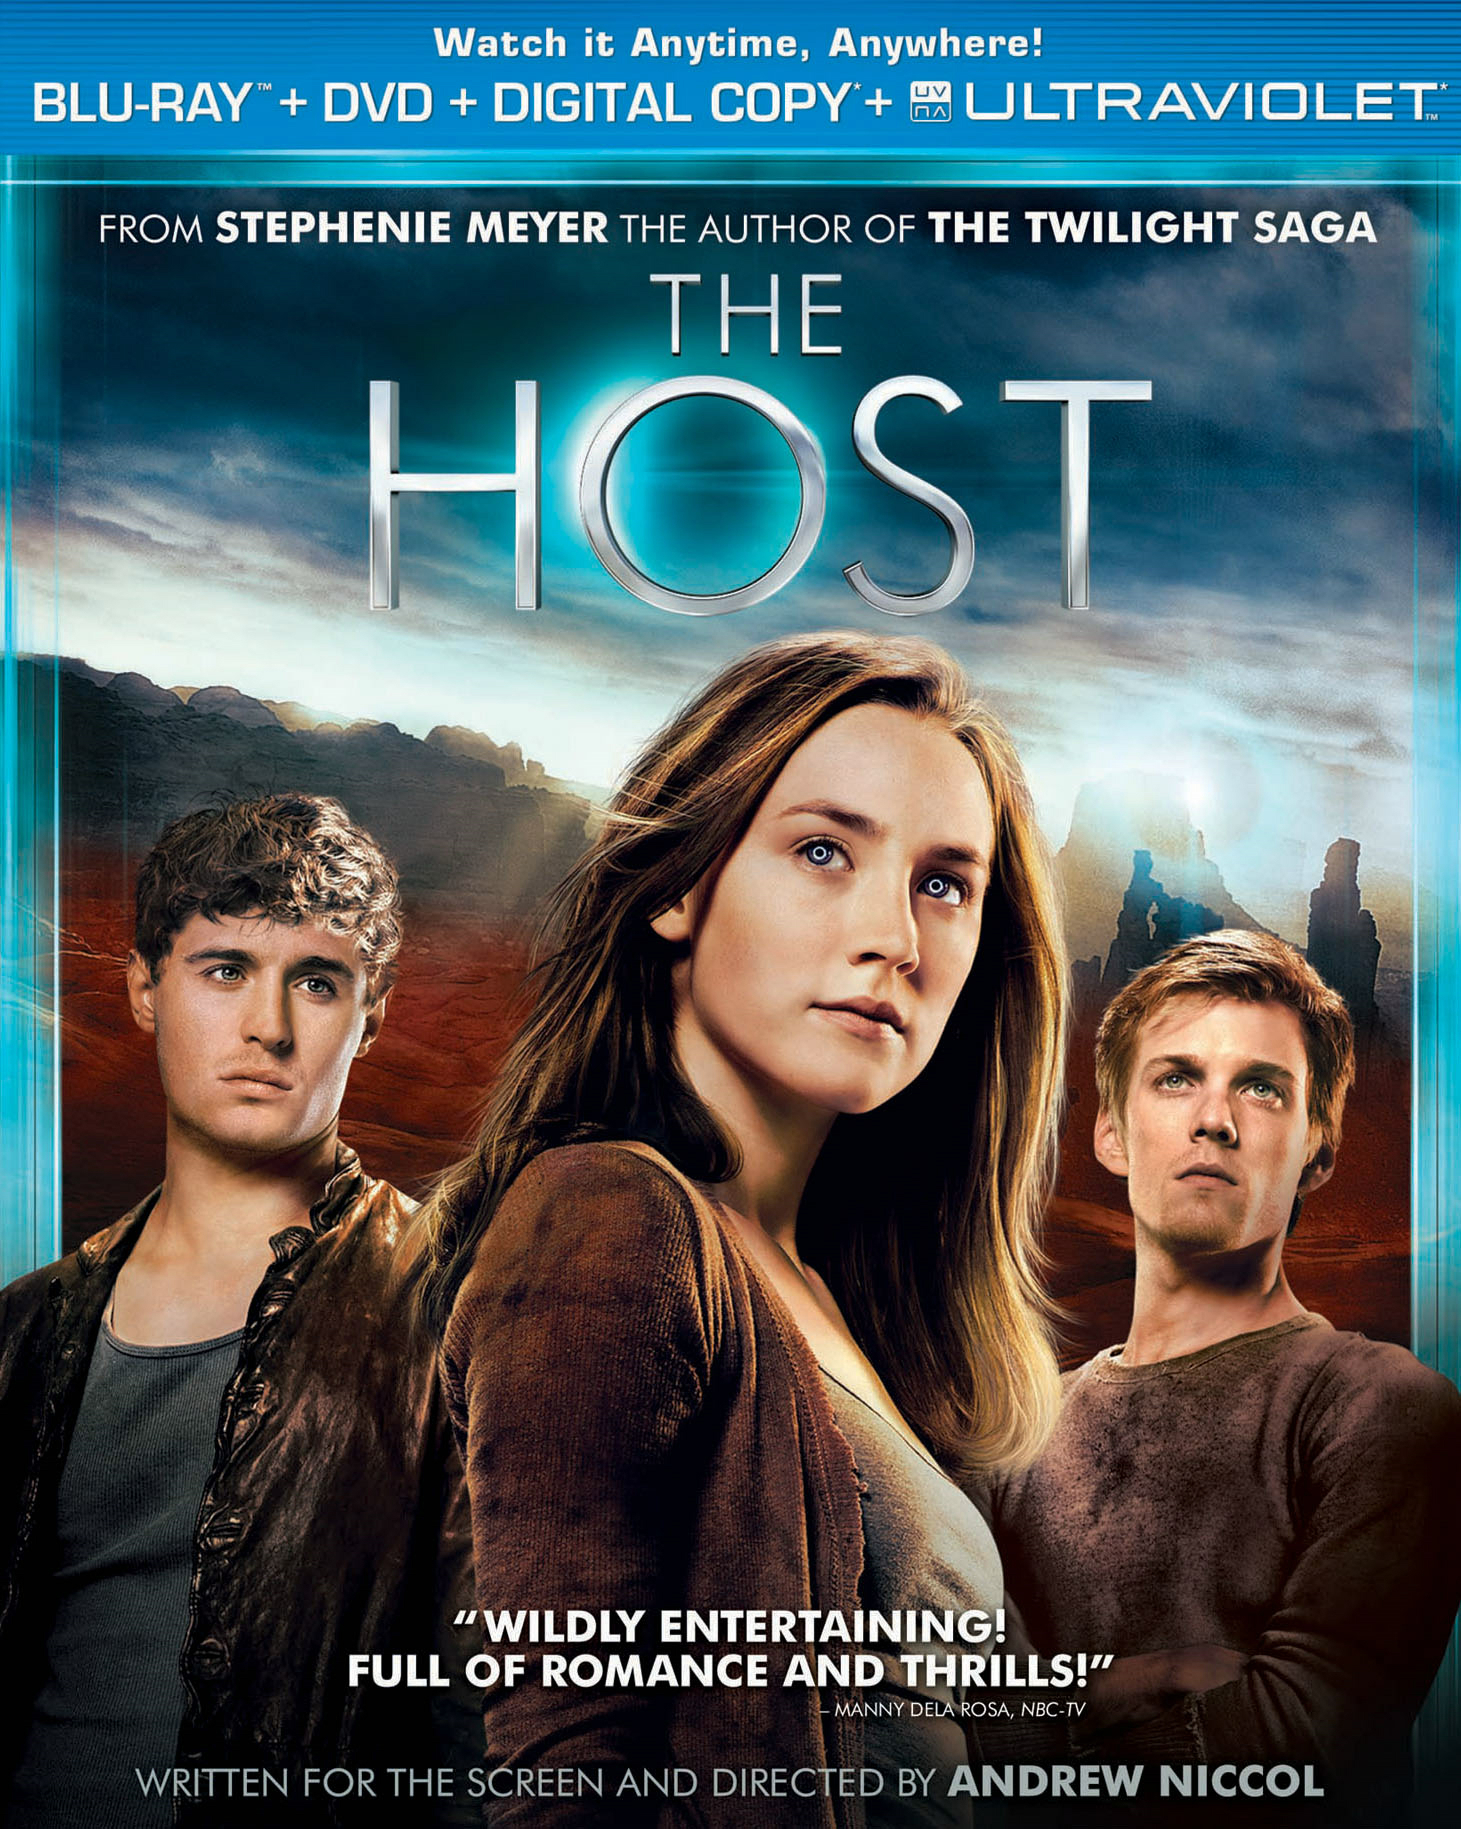 The Host (DVD + Digital) - Blu-ray [ 2013 ]  - Sci Fi Movies On Blu-ray - Movies On GRUV